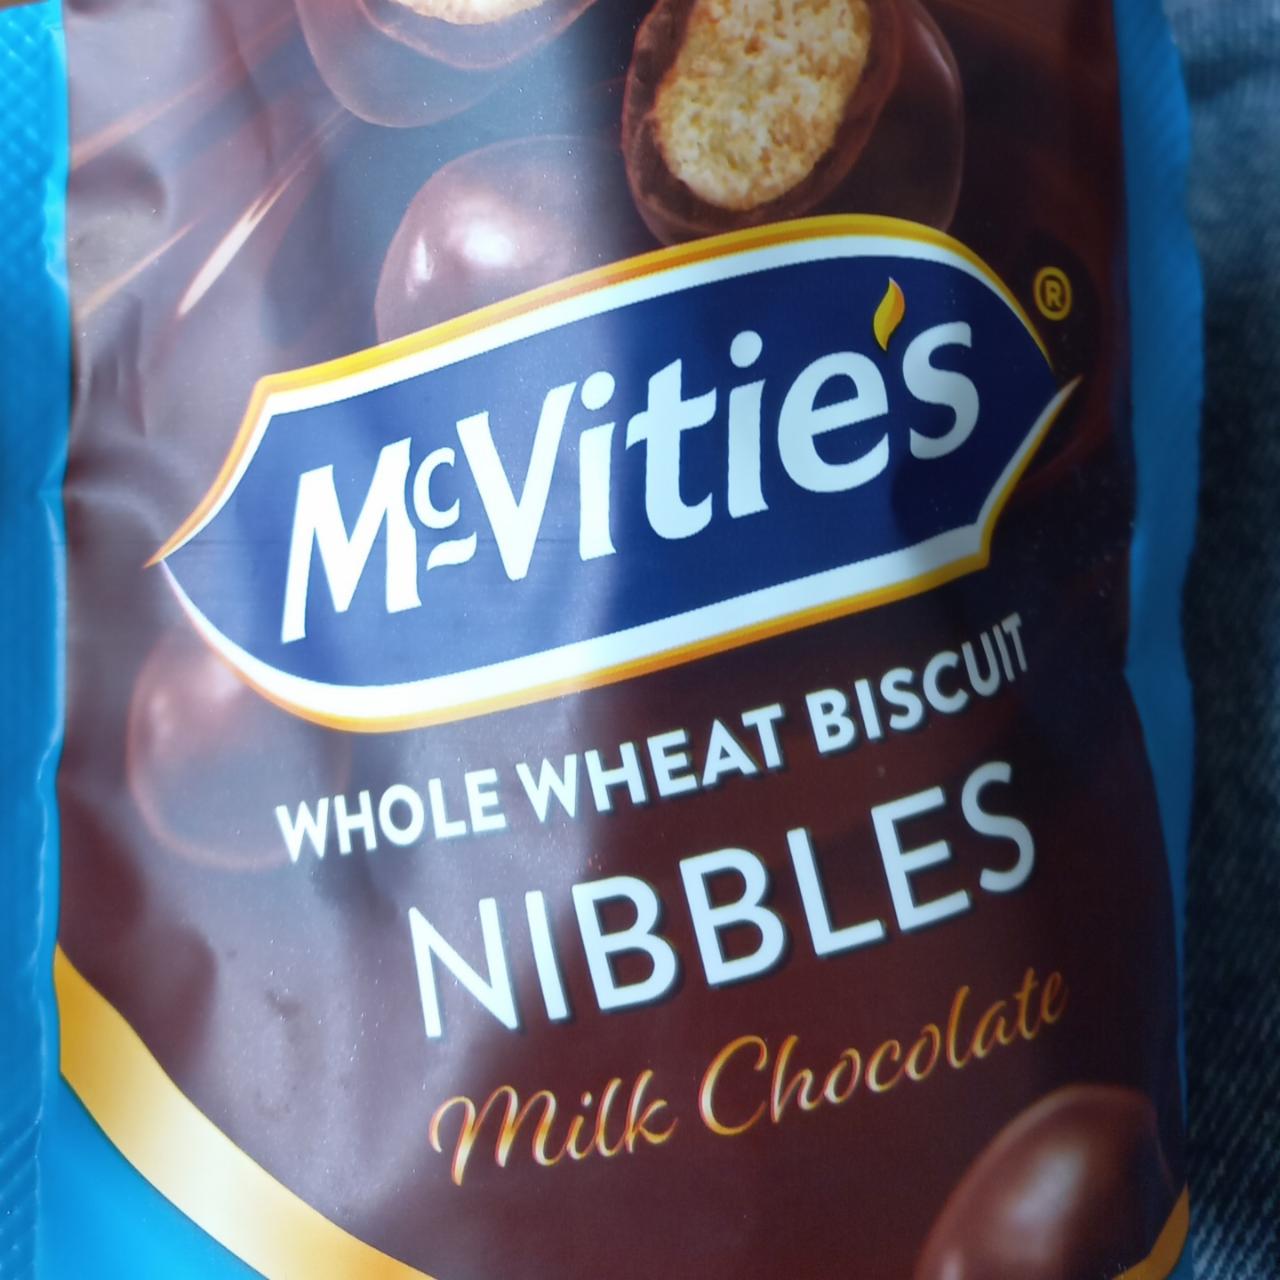 Zdjęcia - Whole wheat biscuit nibbles milk chocolate McVities